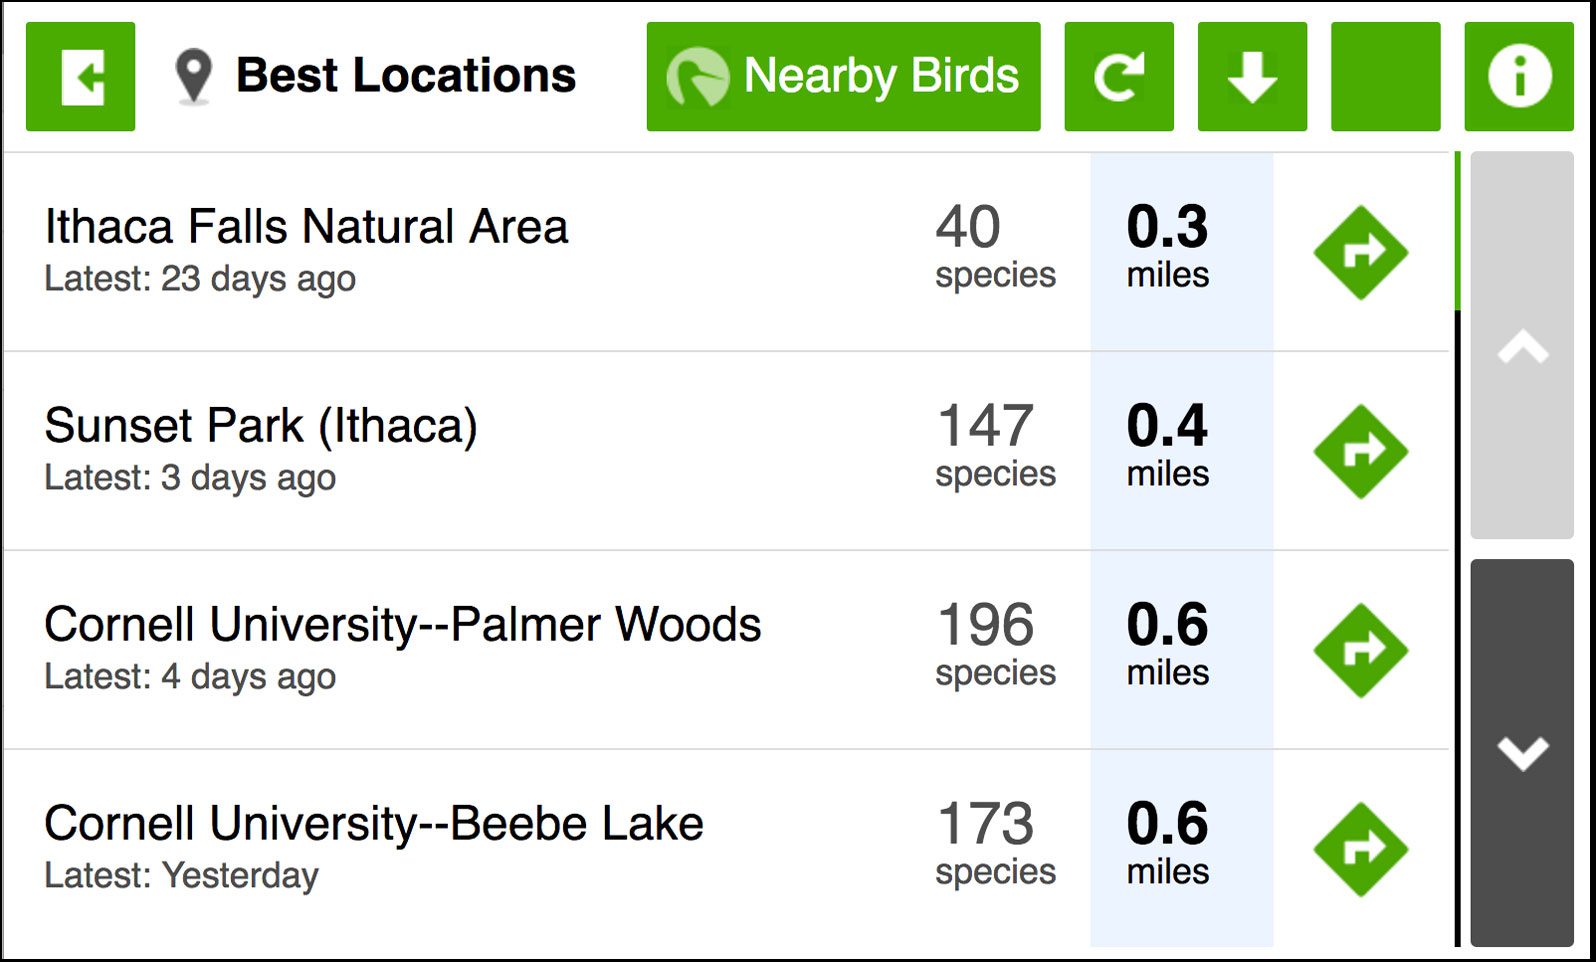 The app displays nearby birding "Hotspots."